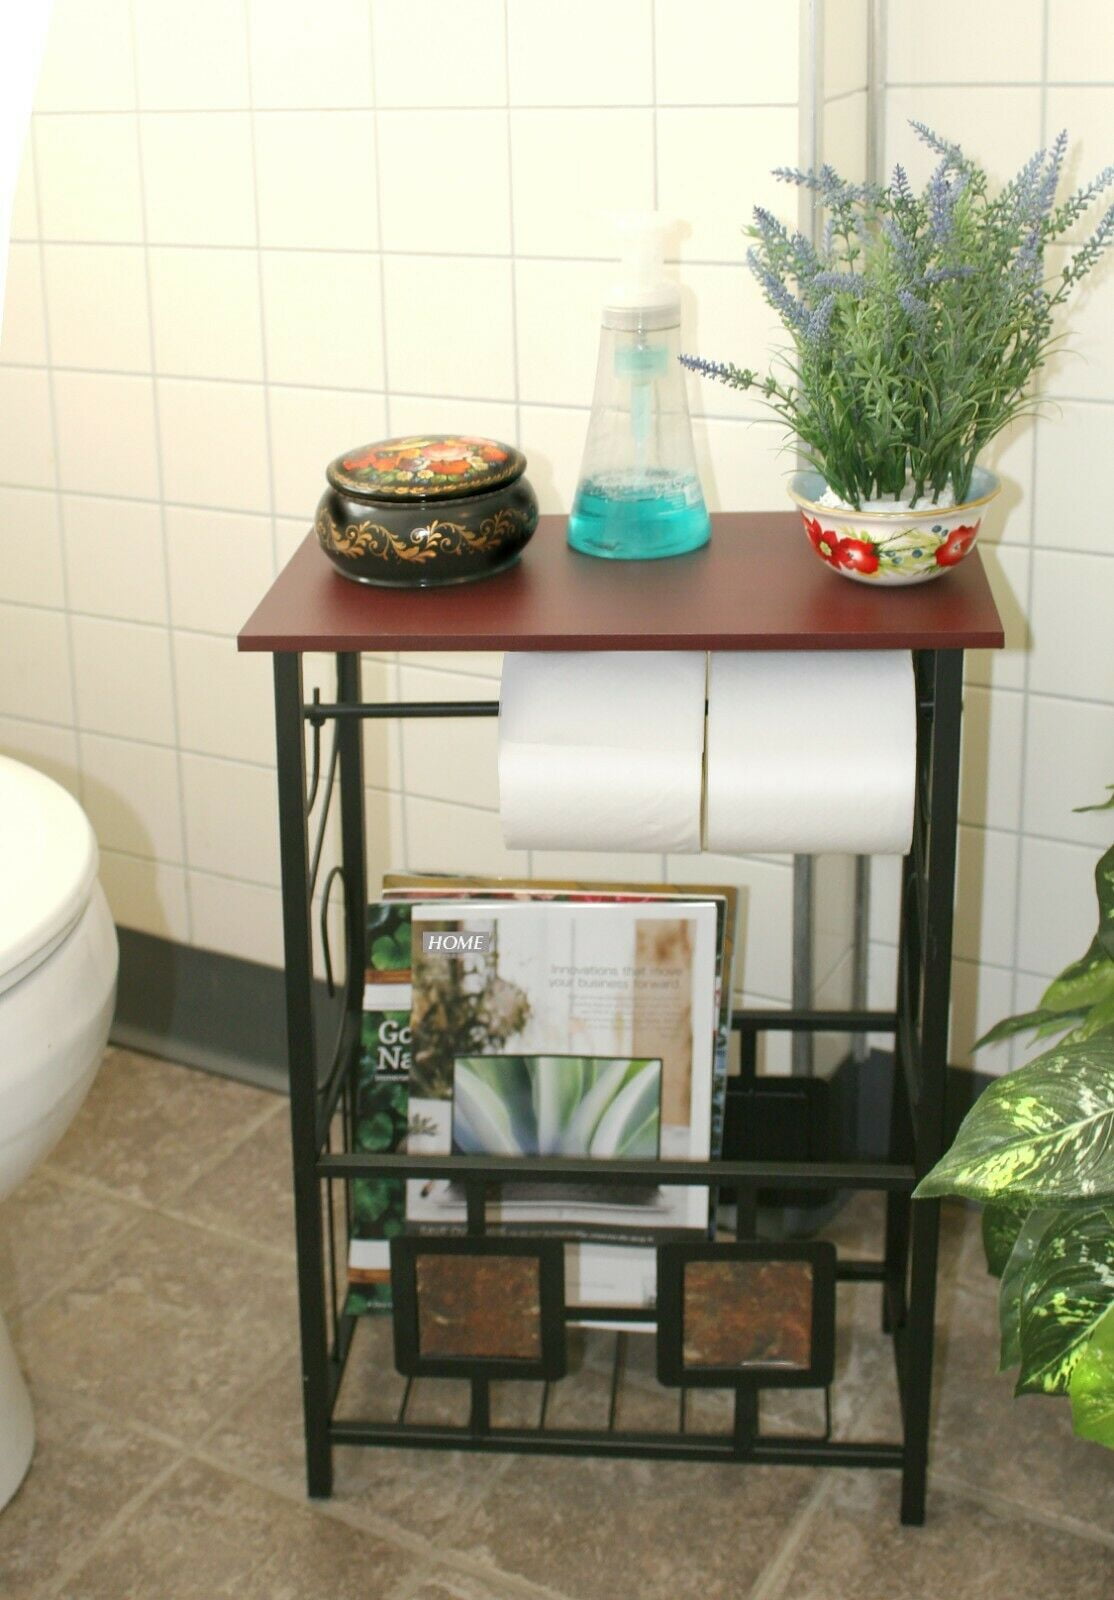 Ambiguity Volcano radical Bathroom Table - Toilet Tissue Paper Holder Stand Rack - Magazine Storage  Organizer- Small End Table - Walmart.com